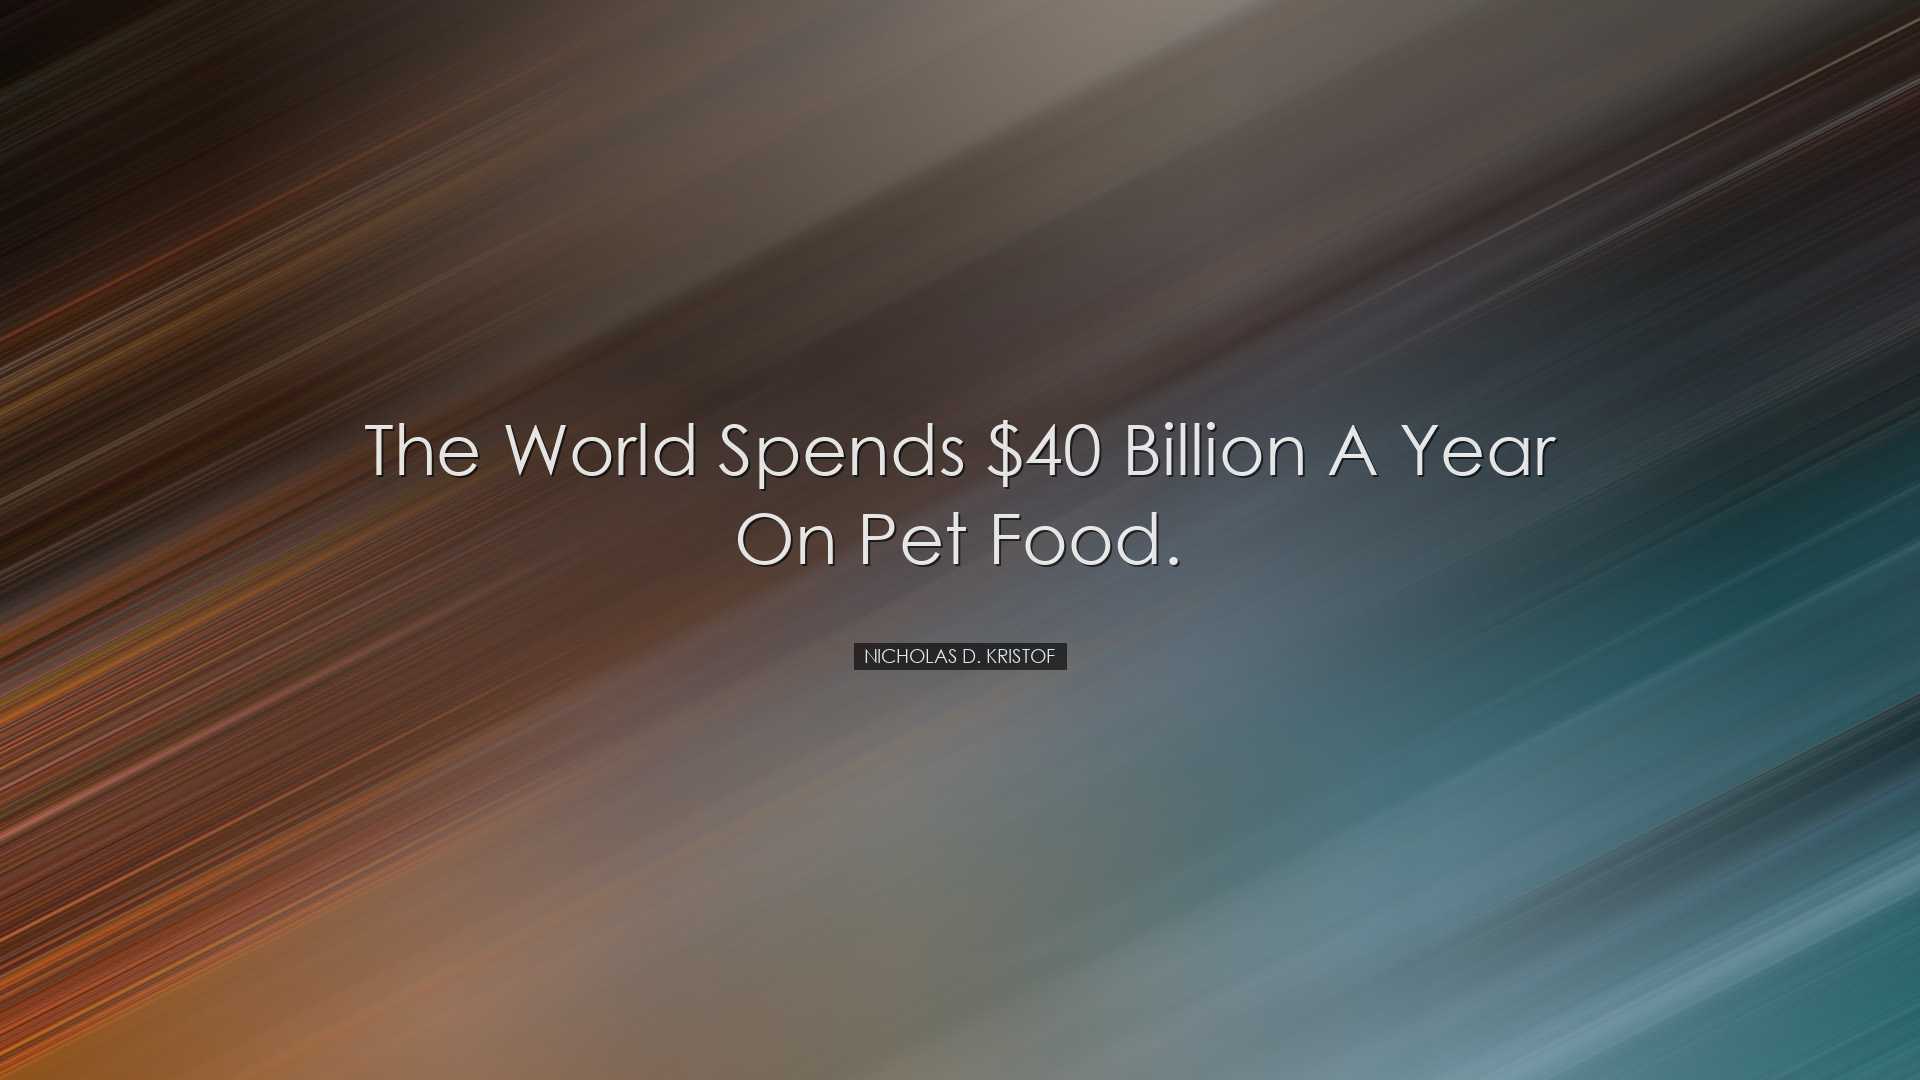 The world spends $40 billion a year on pet food. - Nicholas D. Kri